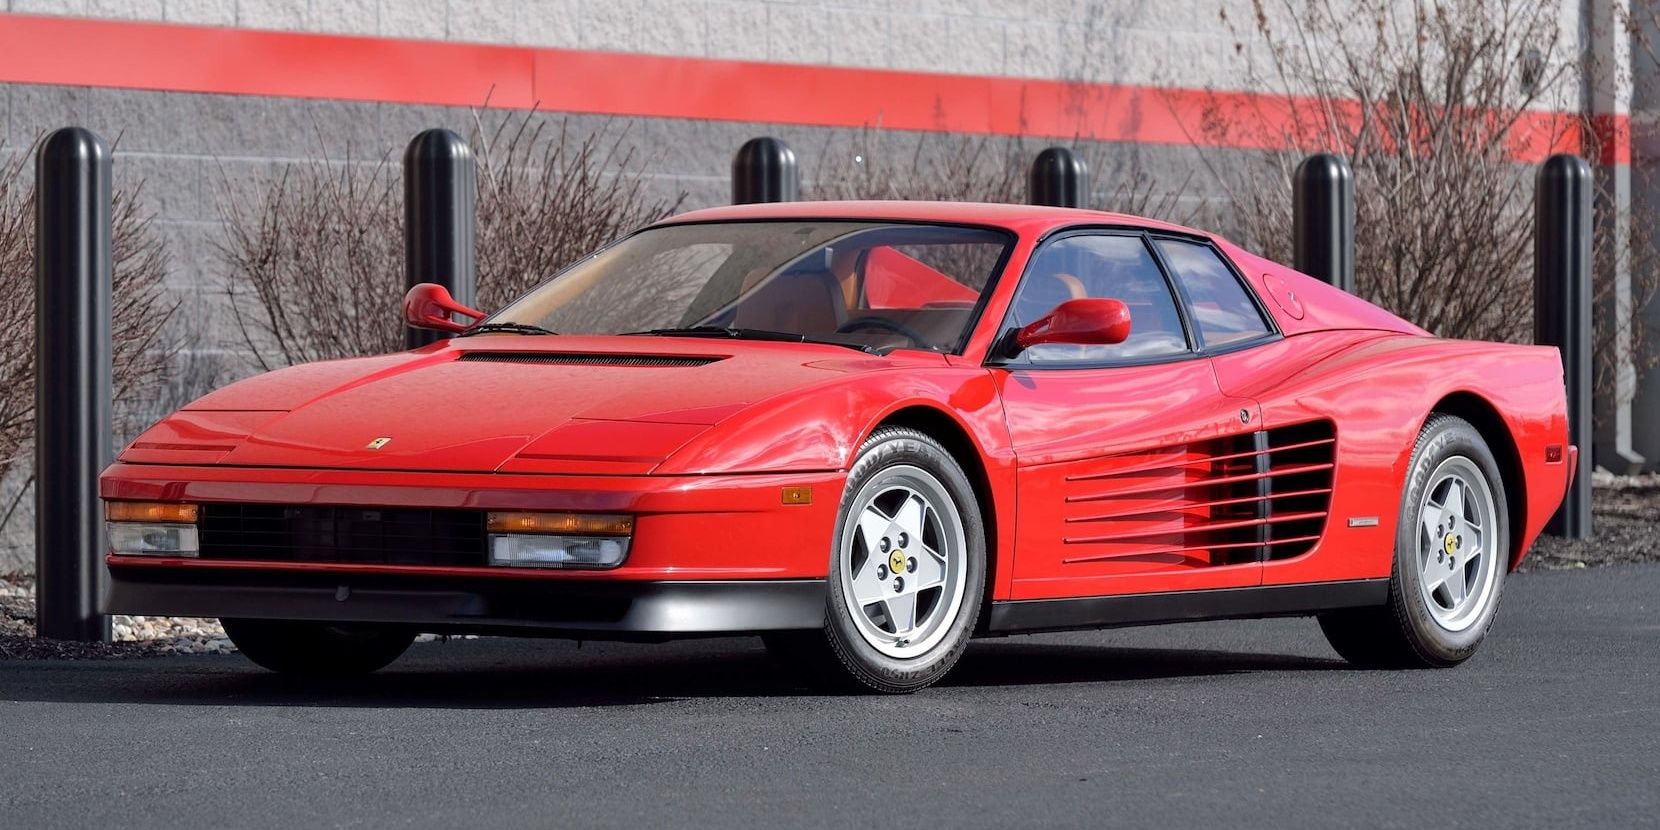 1989 Ferrari Testarossa recortado (1)